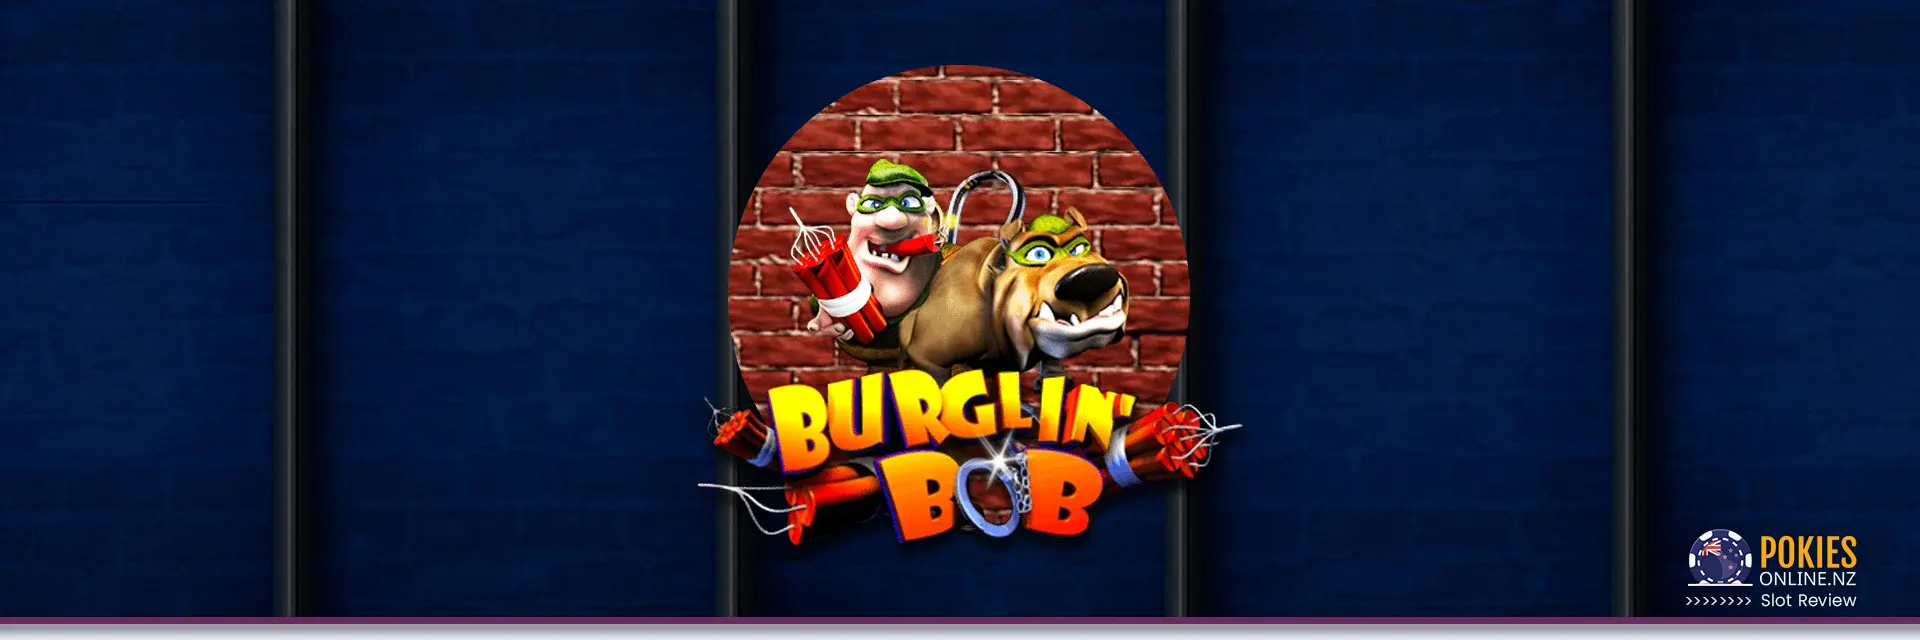 Burgling Bob slot Banner